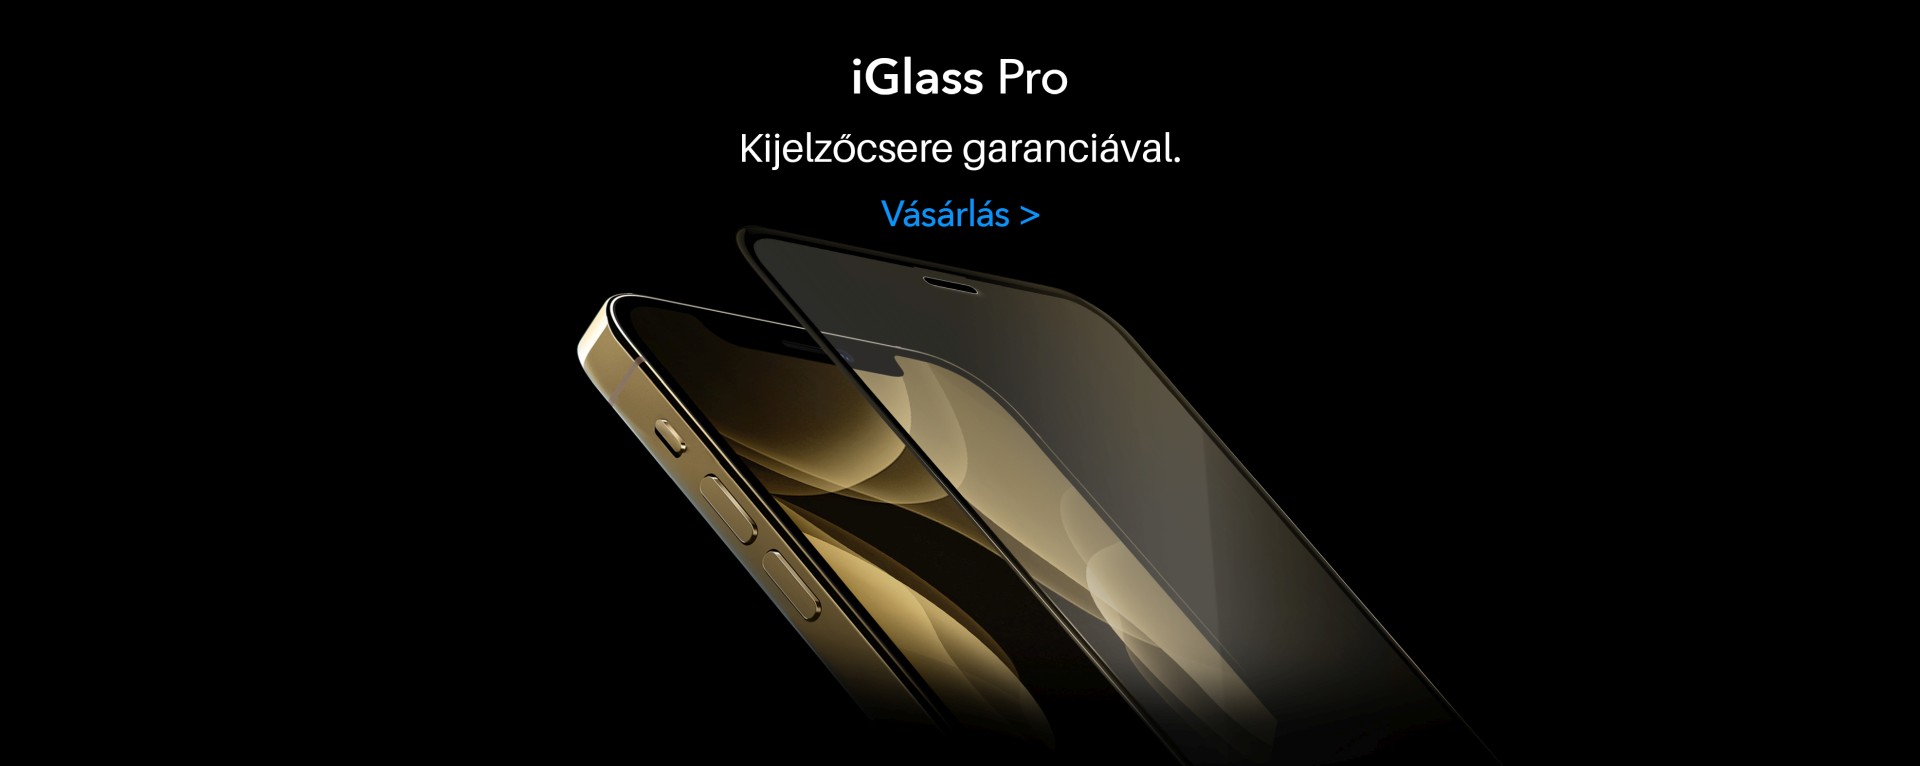 desktop pro-iglass-iphone-uvegfolia